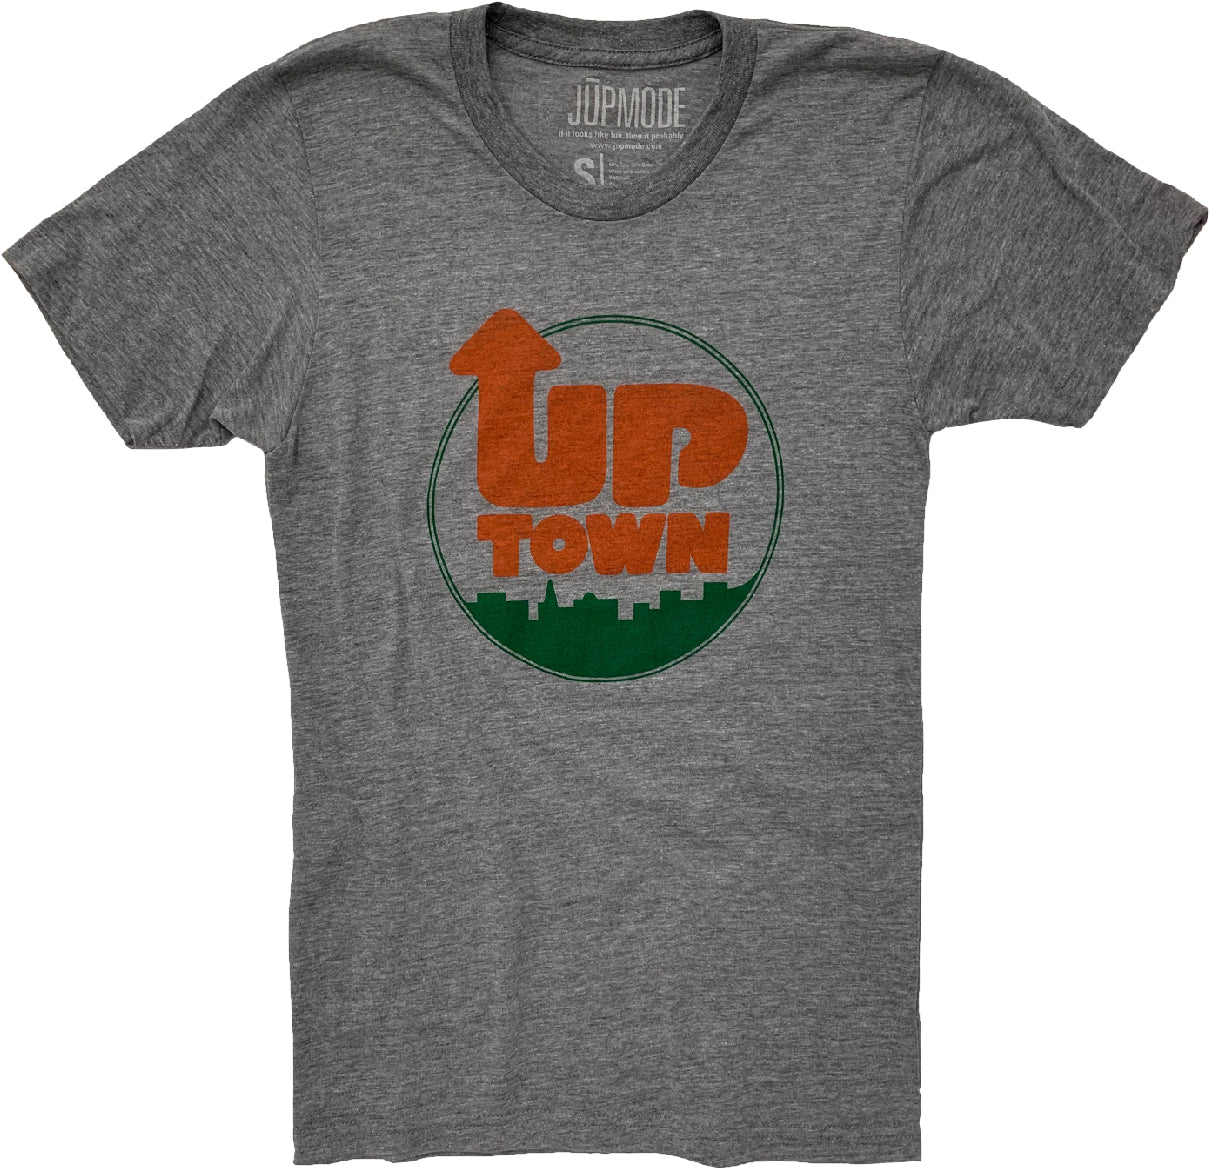 Uptown Toledo Shirt (Discontinued)